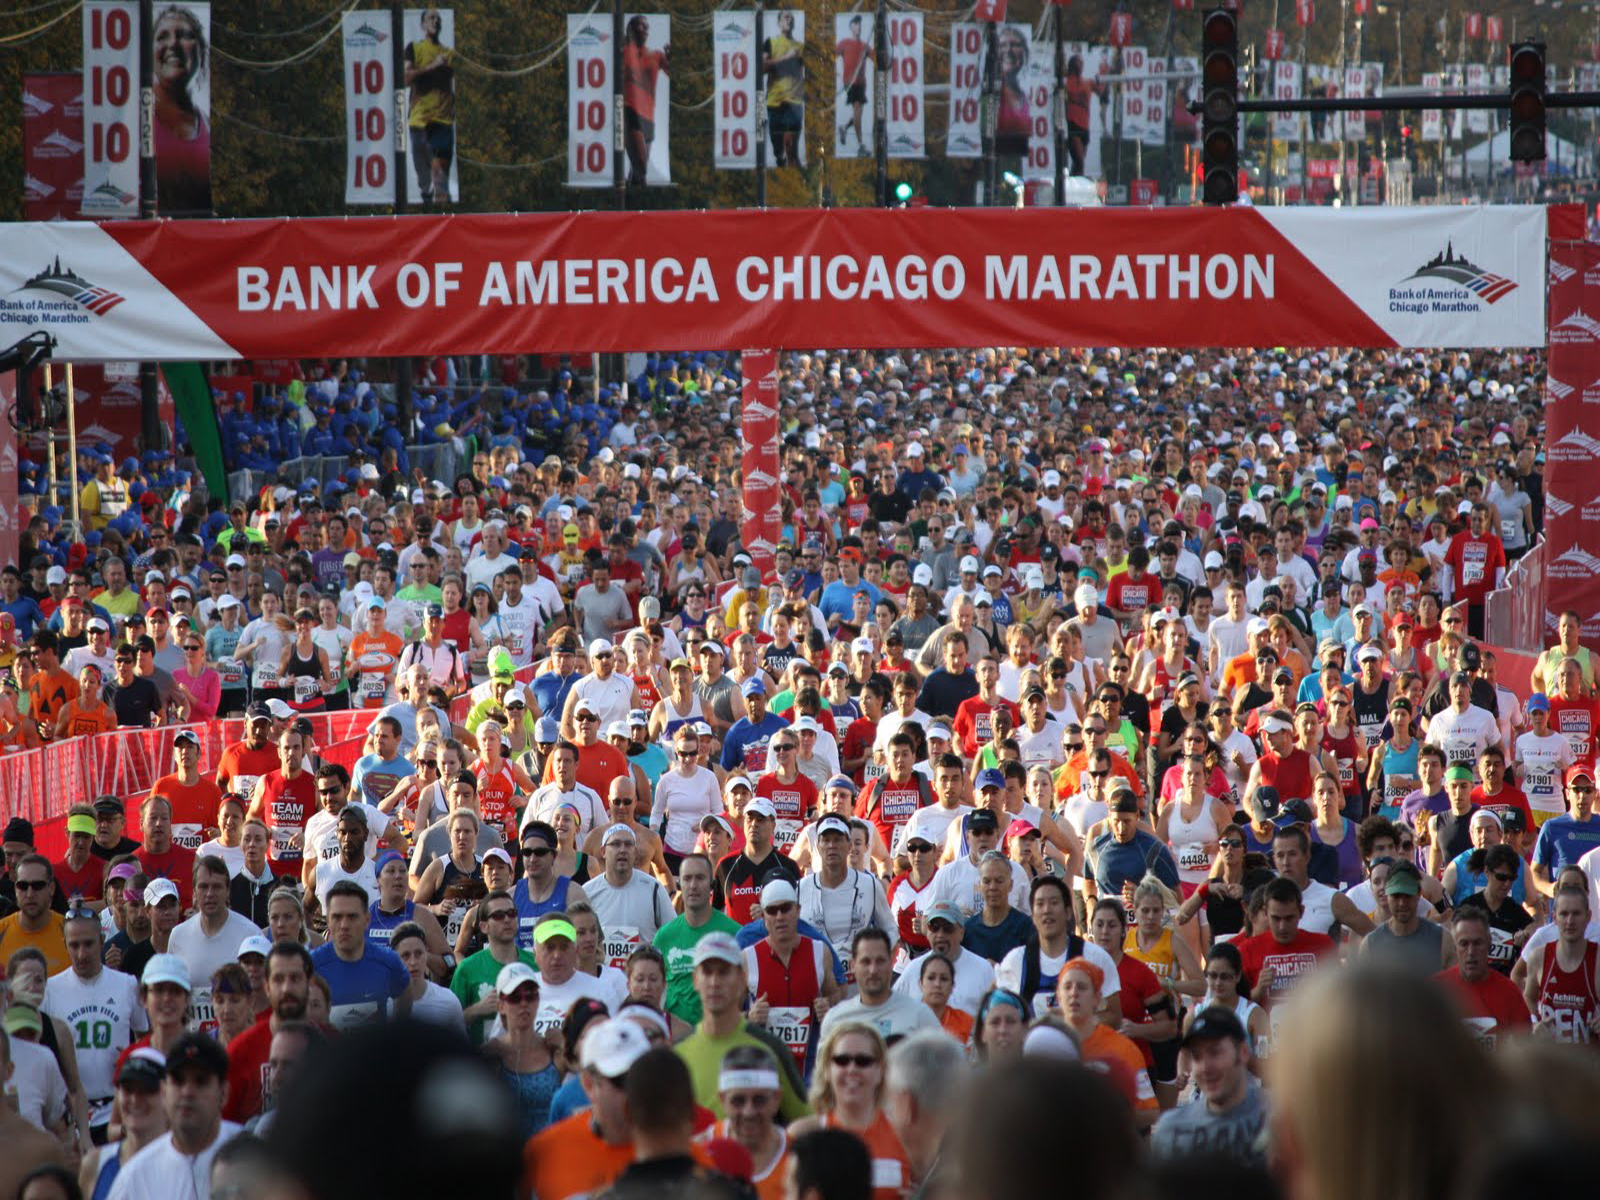 Chicago Marathon Puter Desktop Wallpaper Pictures Image